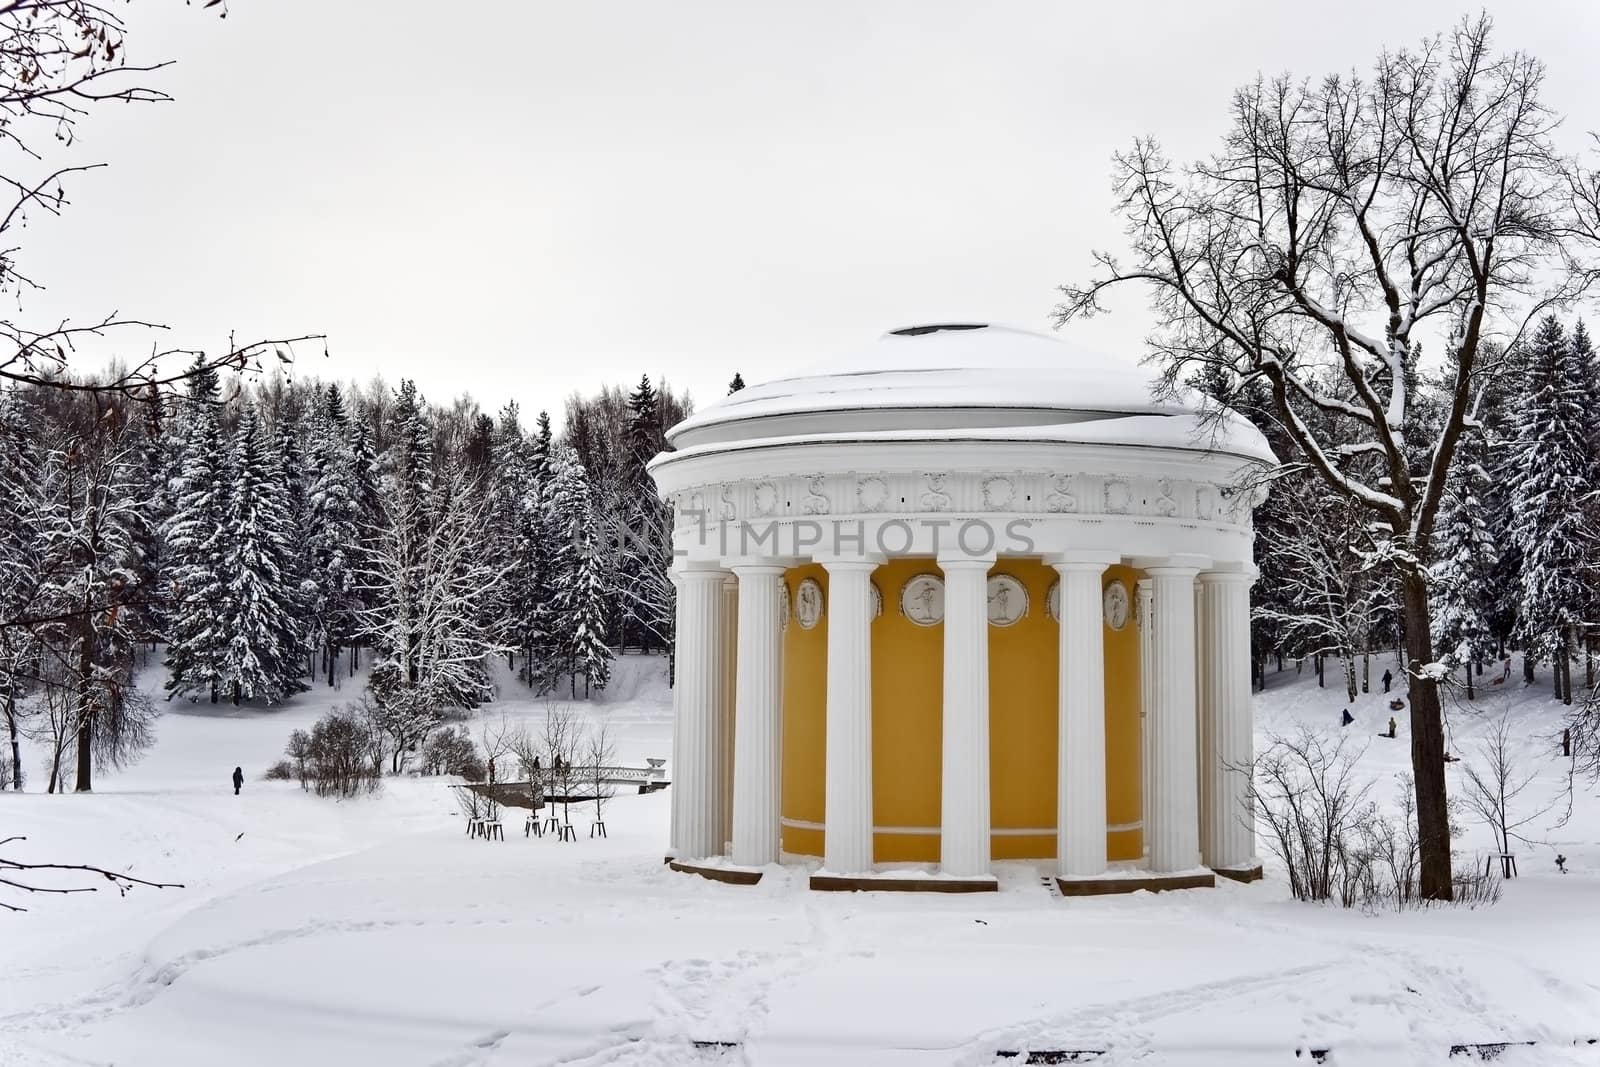 Classical rotunda in winter park